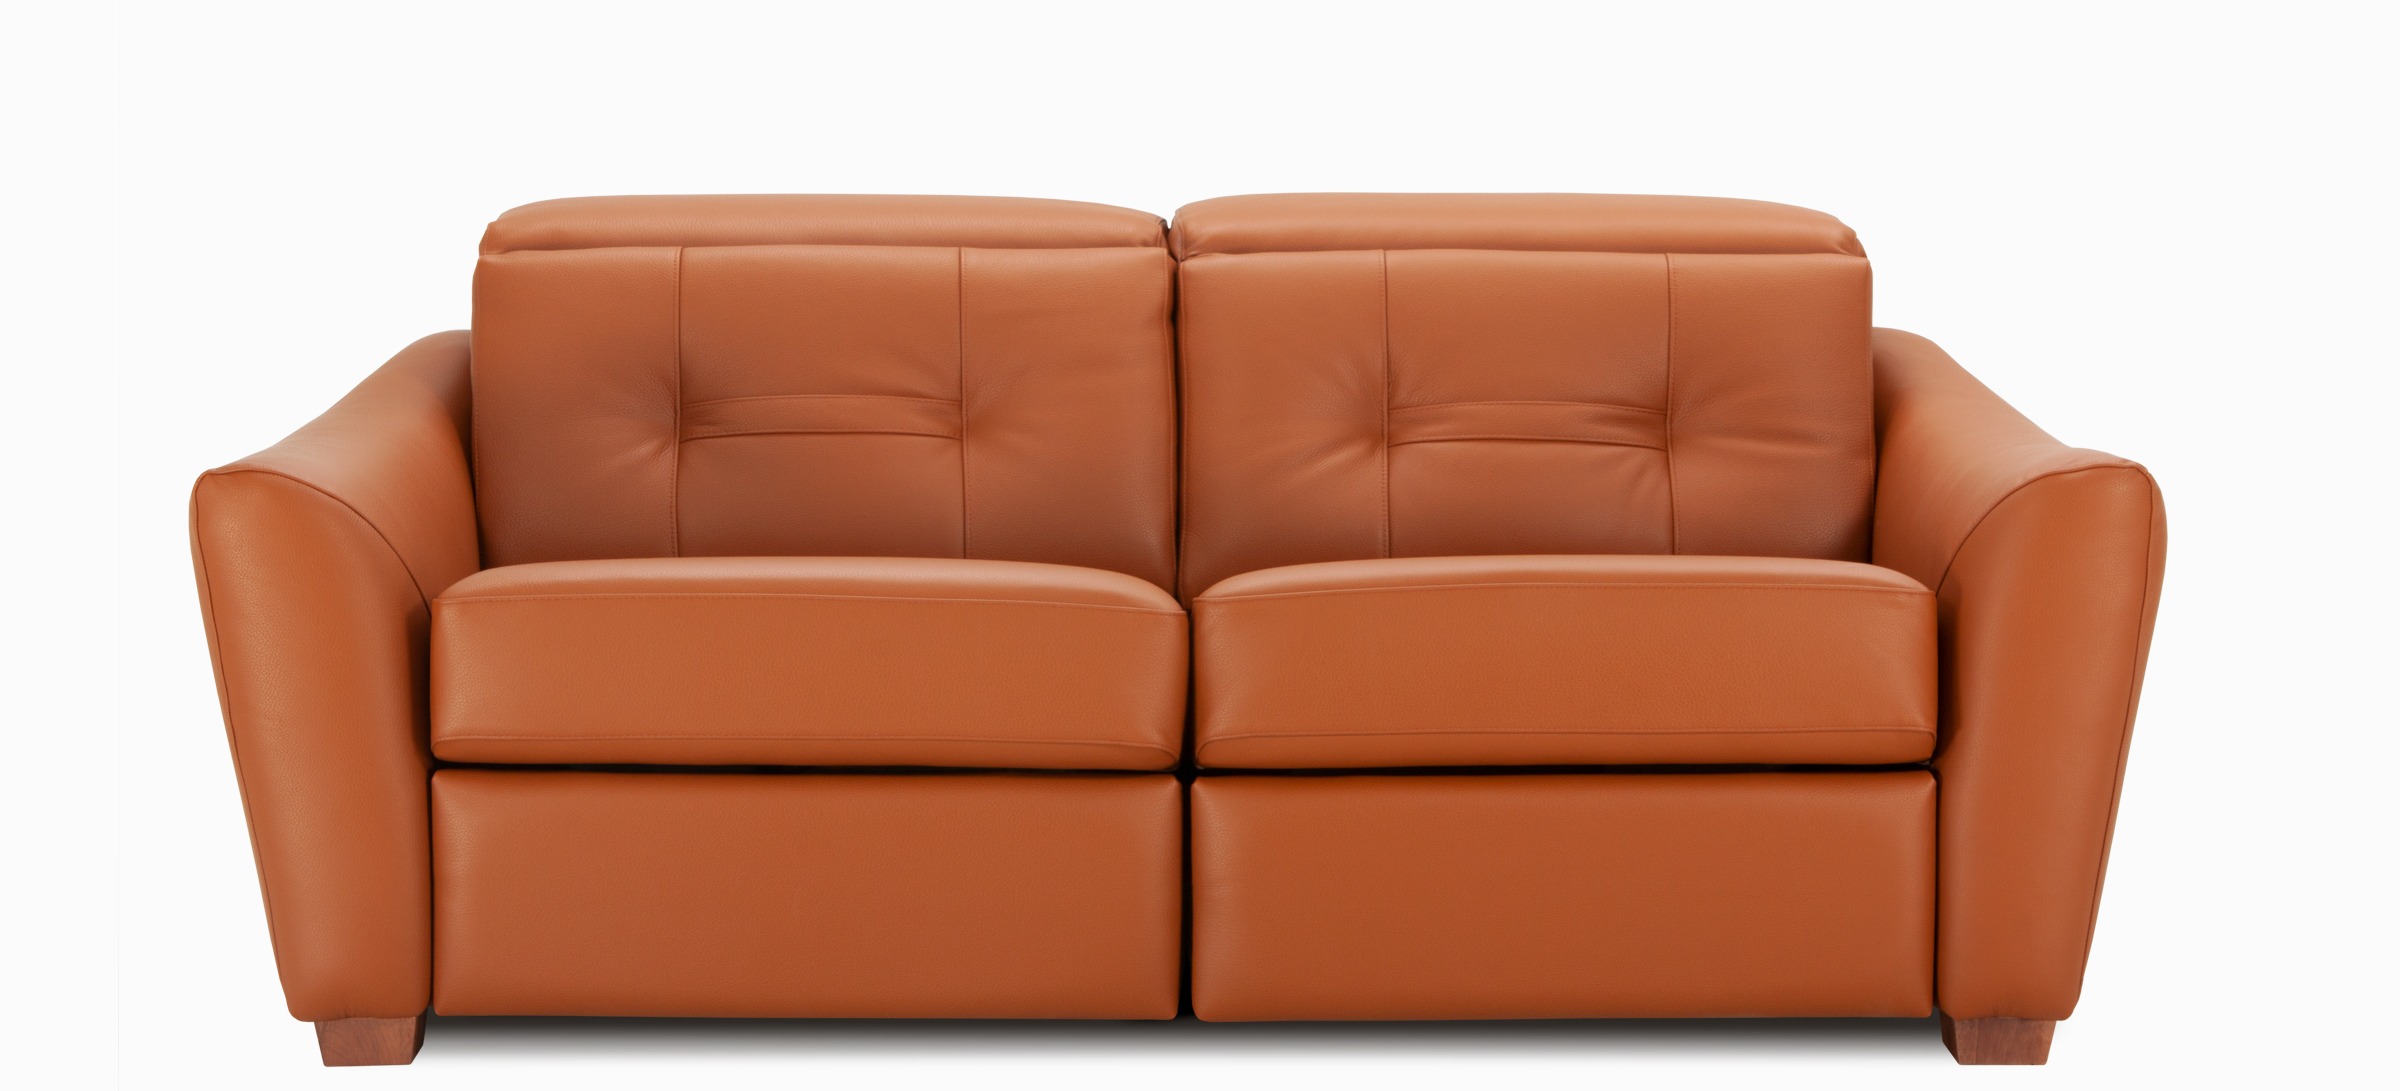 Clario sofa apt cinnamon front